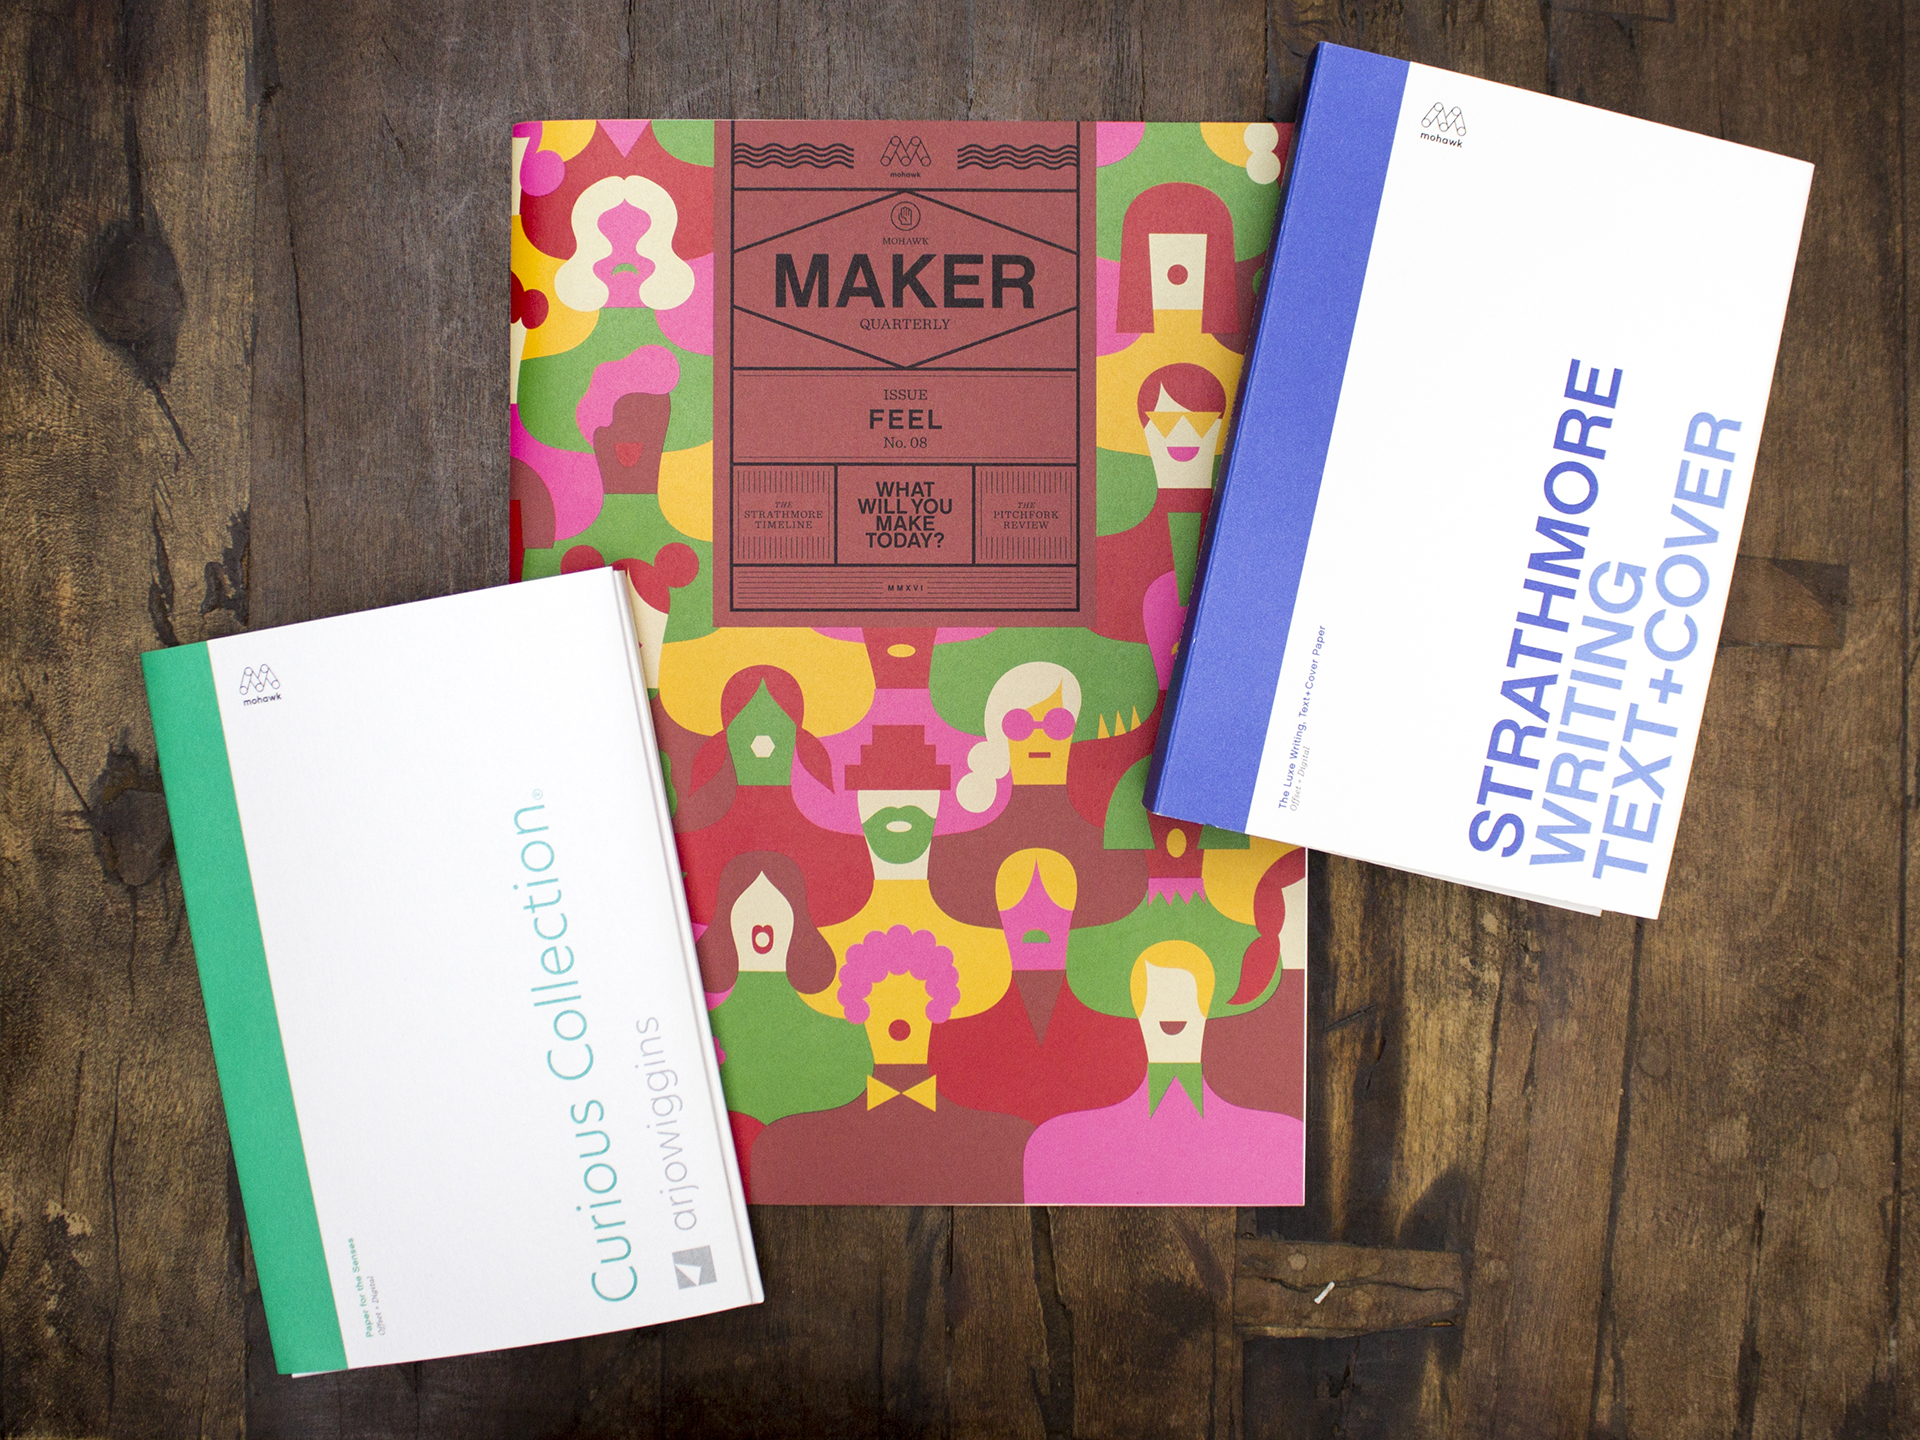 MAker Quarterly and Mohawk swatchbooks arranged together